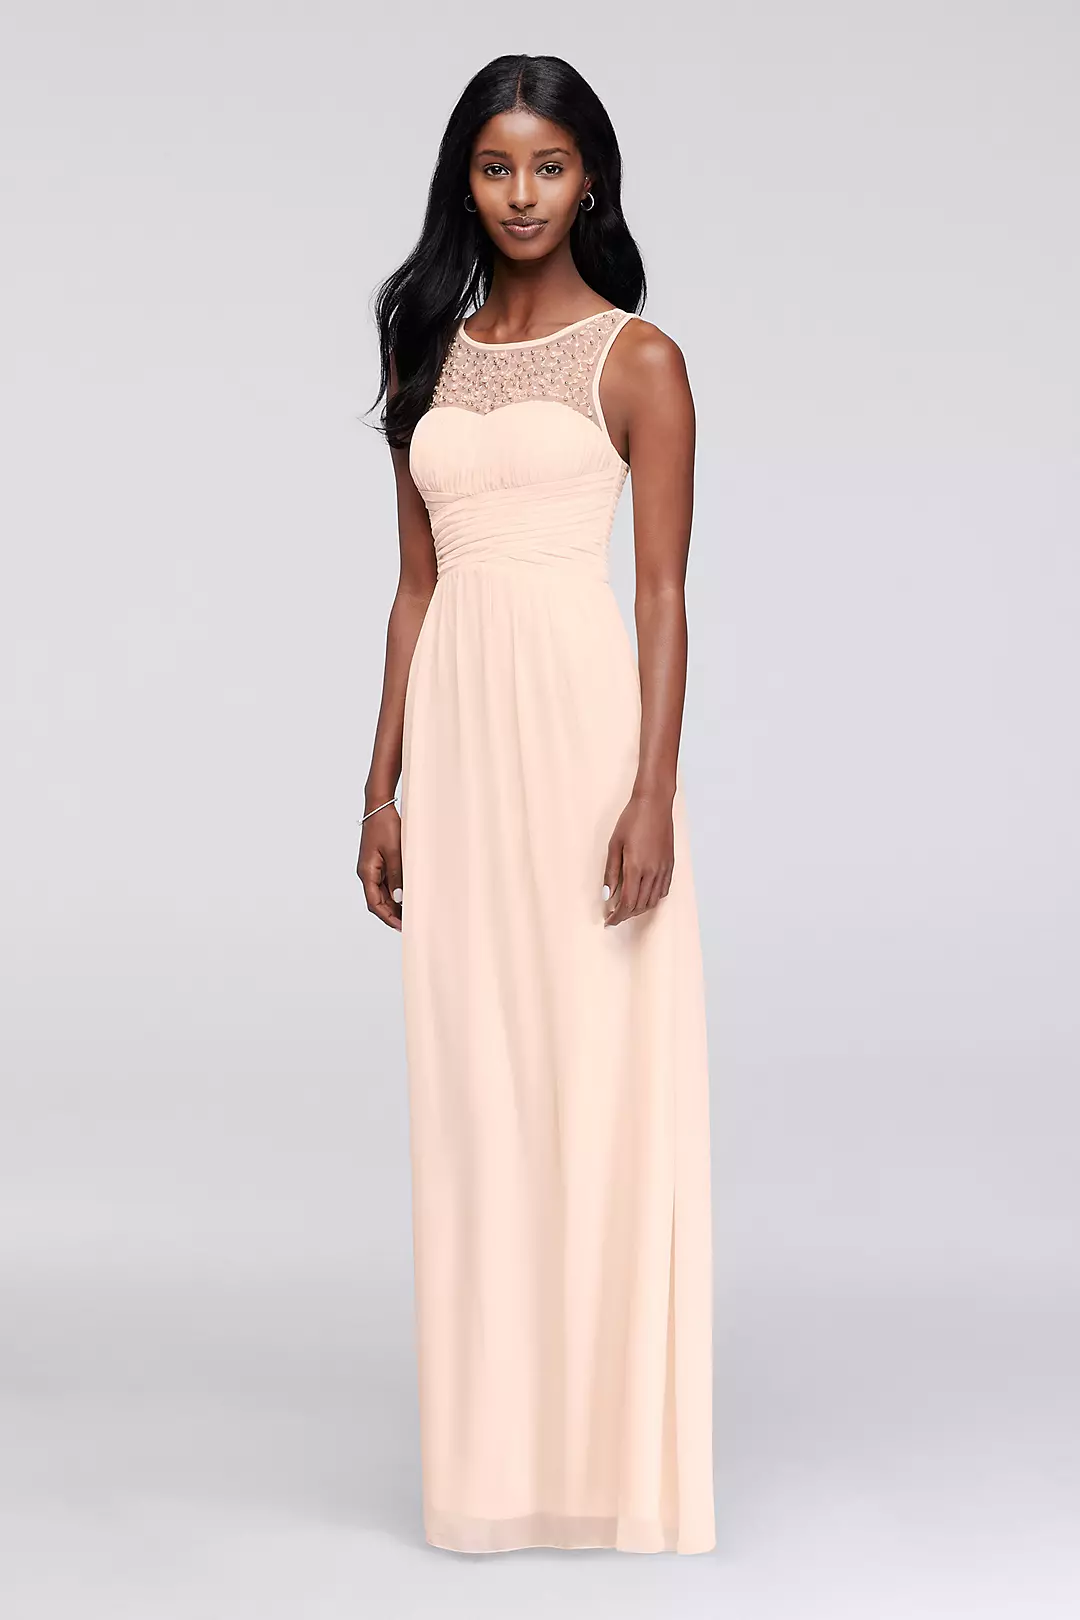 Sleeveless Prom Dress with Illusion Neckline Image